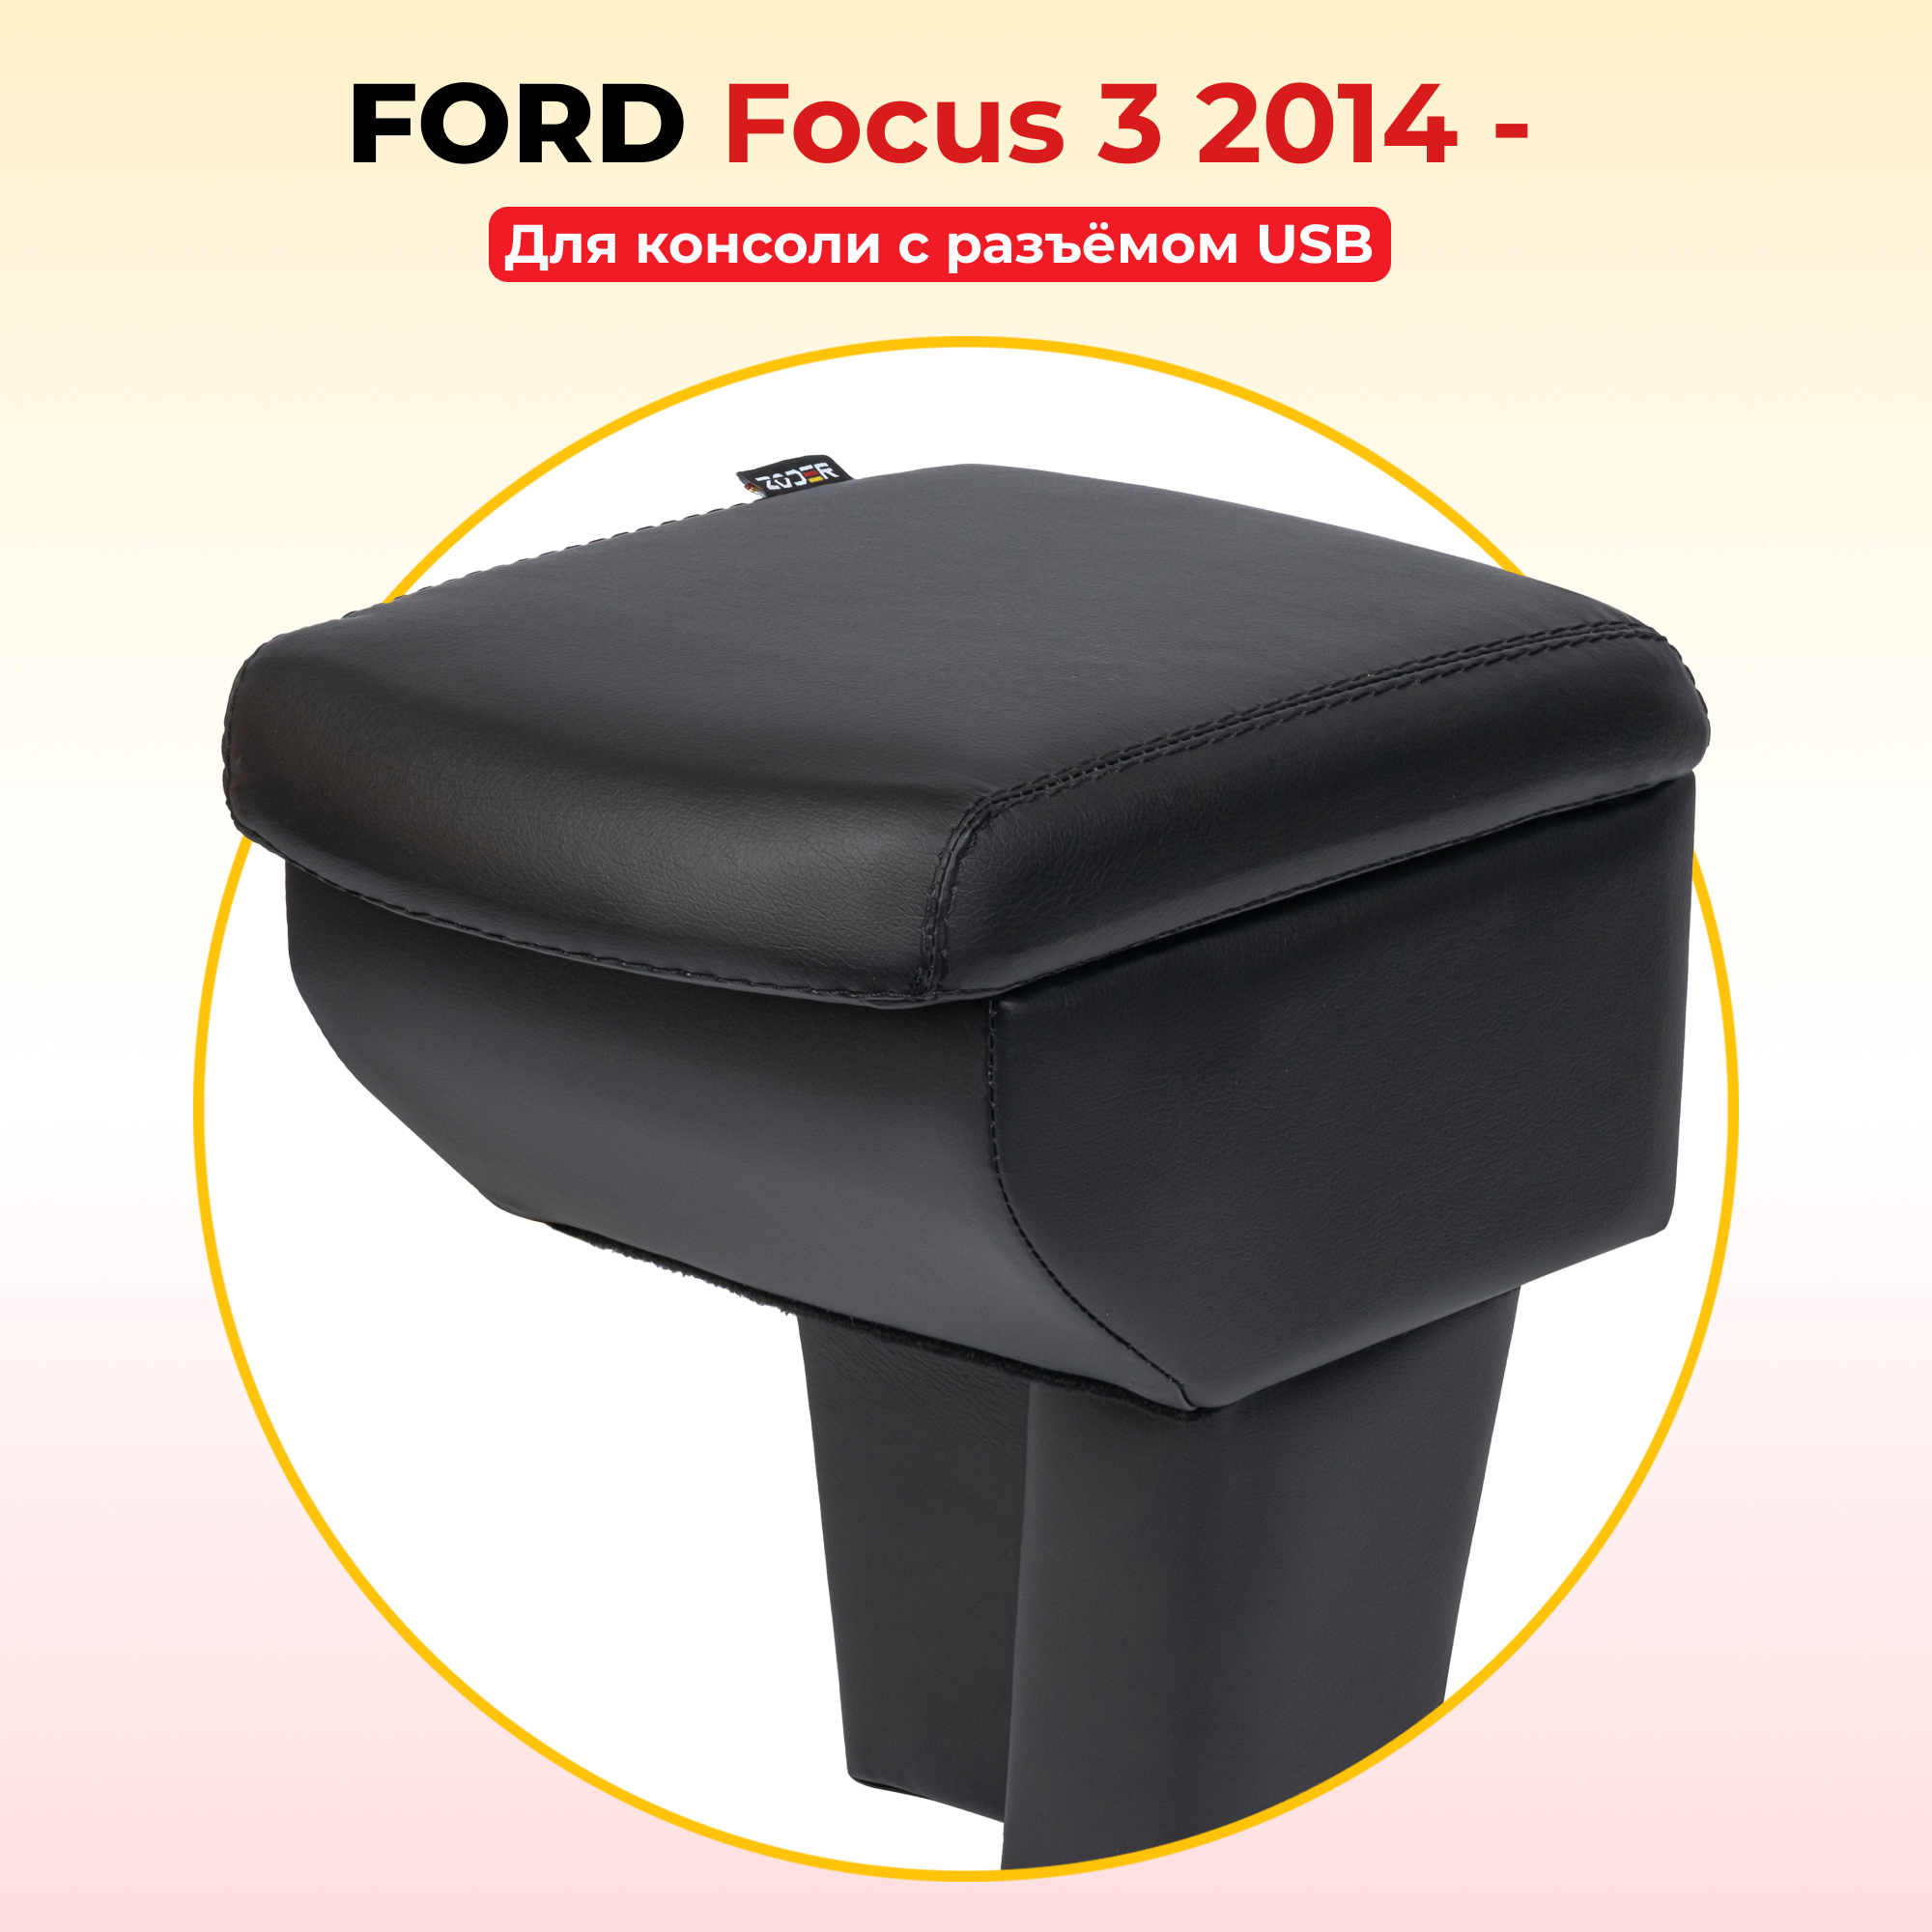 Подлокотник ZODER Ford Focus 3 (2014-) USB